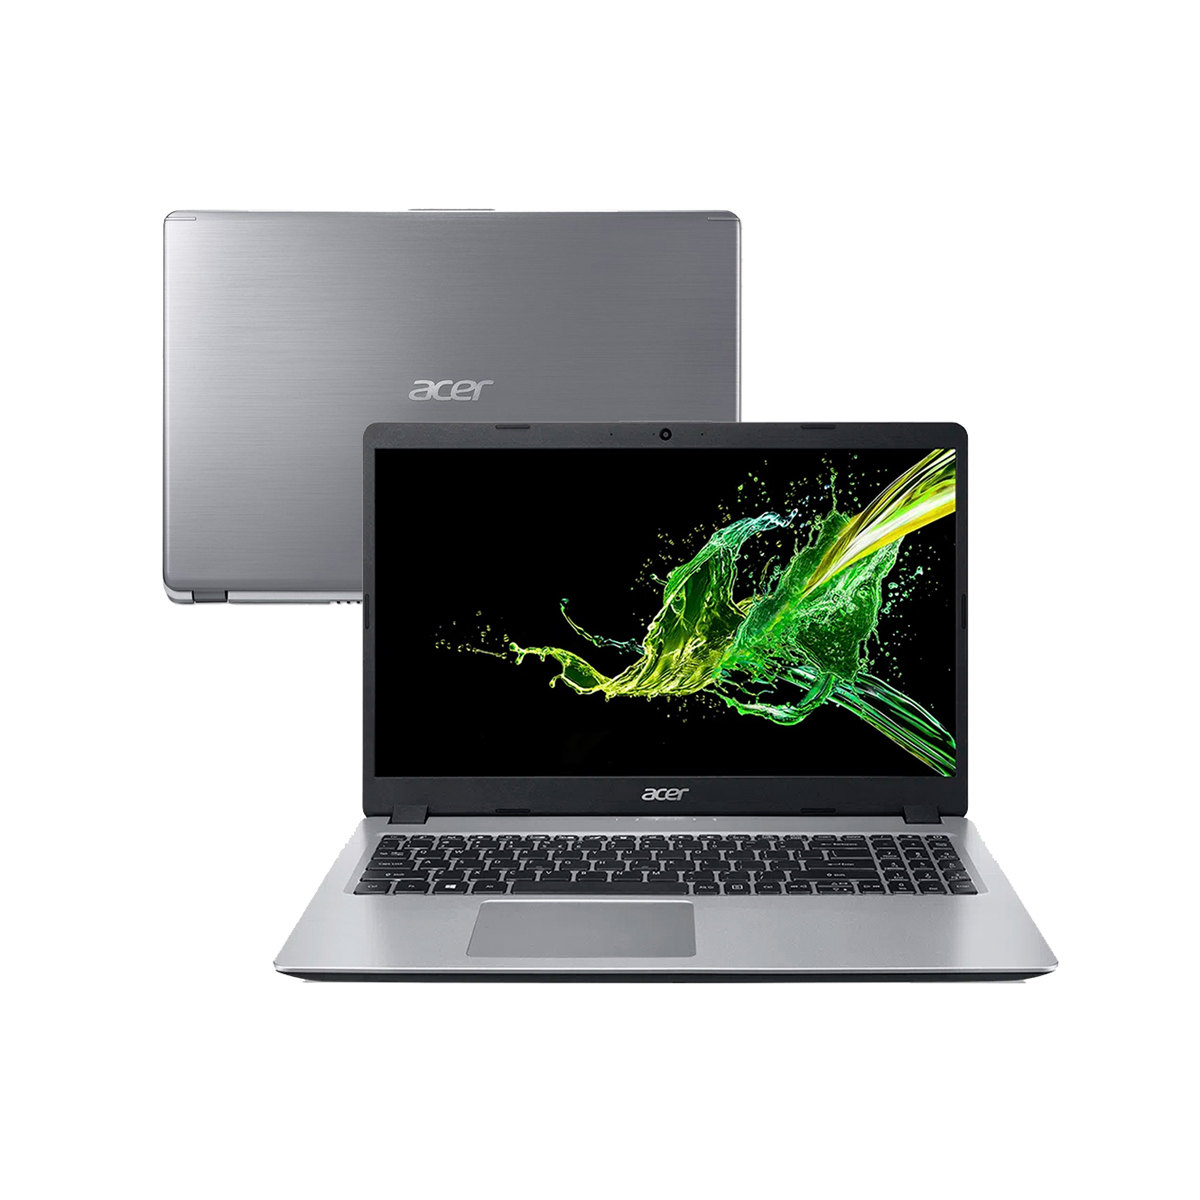 Notebook Acer A515 Core I5 8265u Memoria 8gb Ddr4 Ssd 120gb Tela 15.6' Led Hd Sistema Windows 10 Home